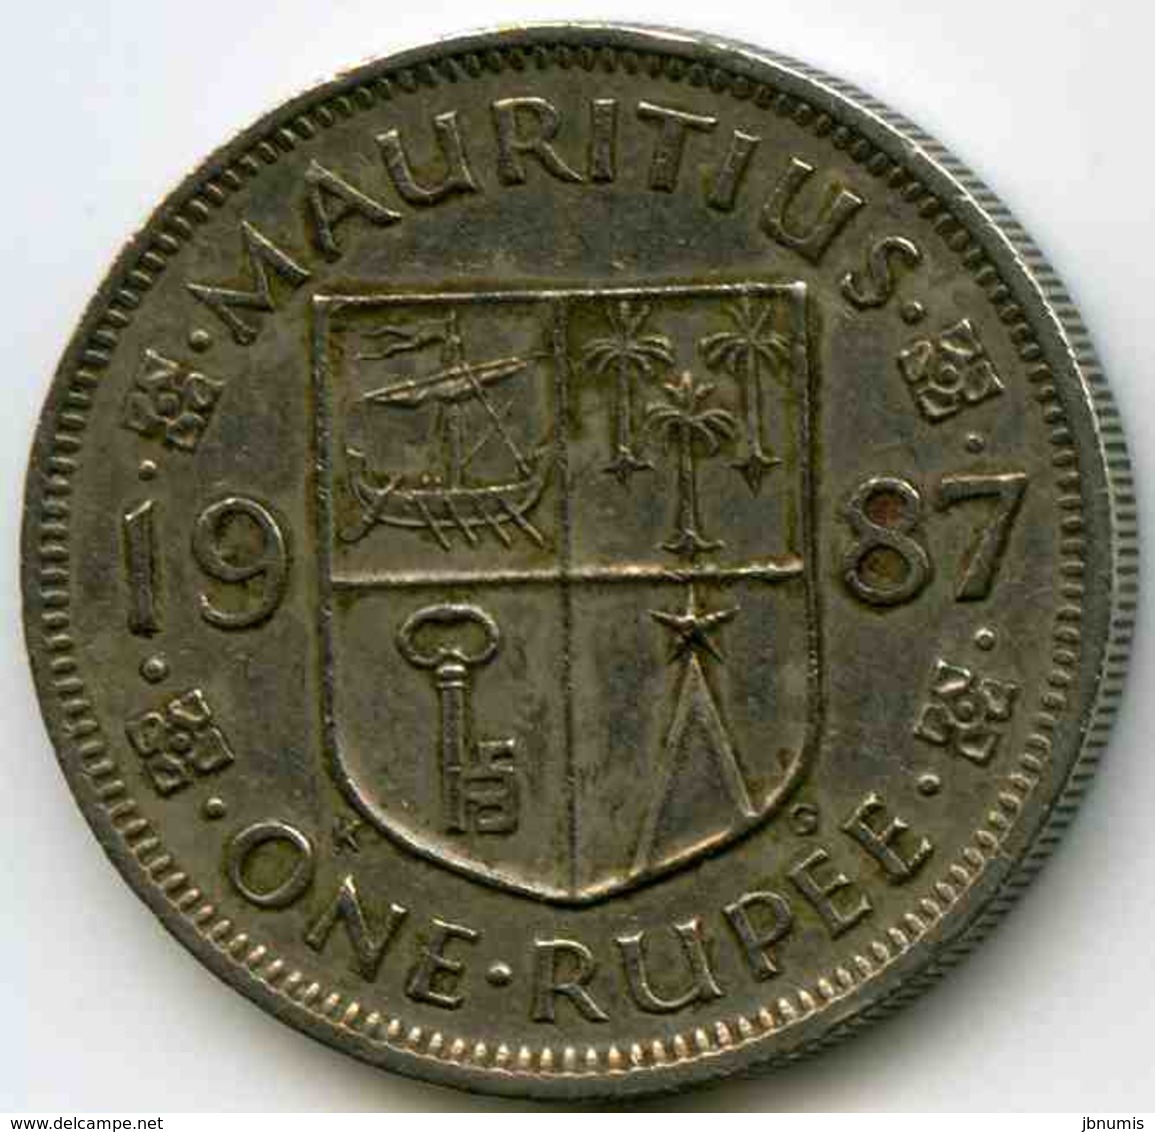 Maurice Mauritius 1 Rupee 1987 KM 55 - Mauritius